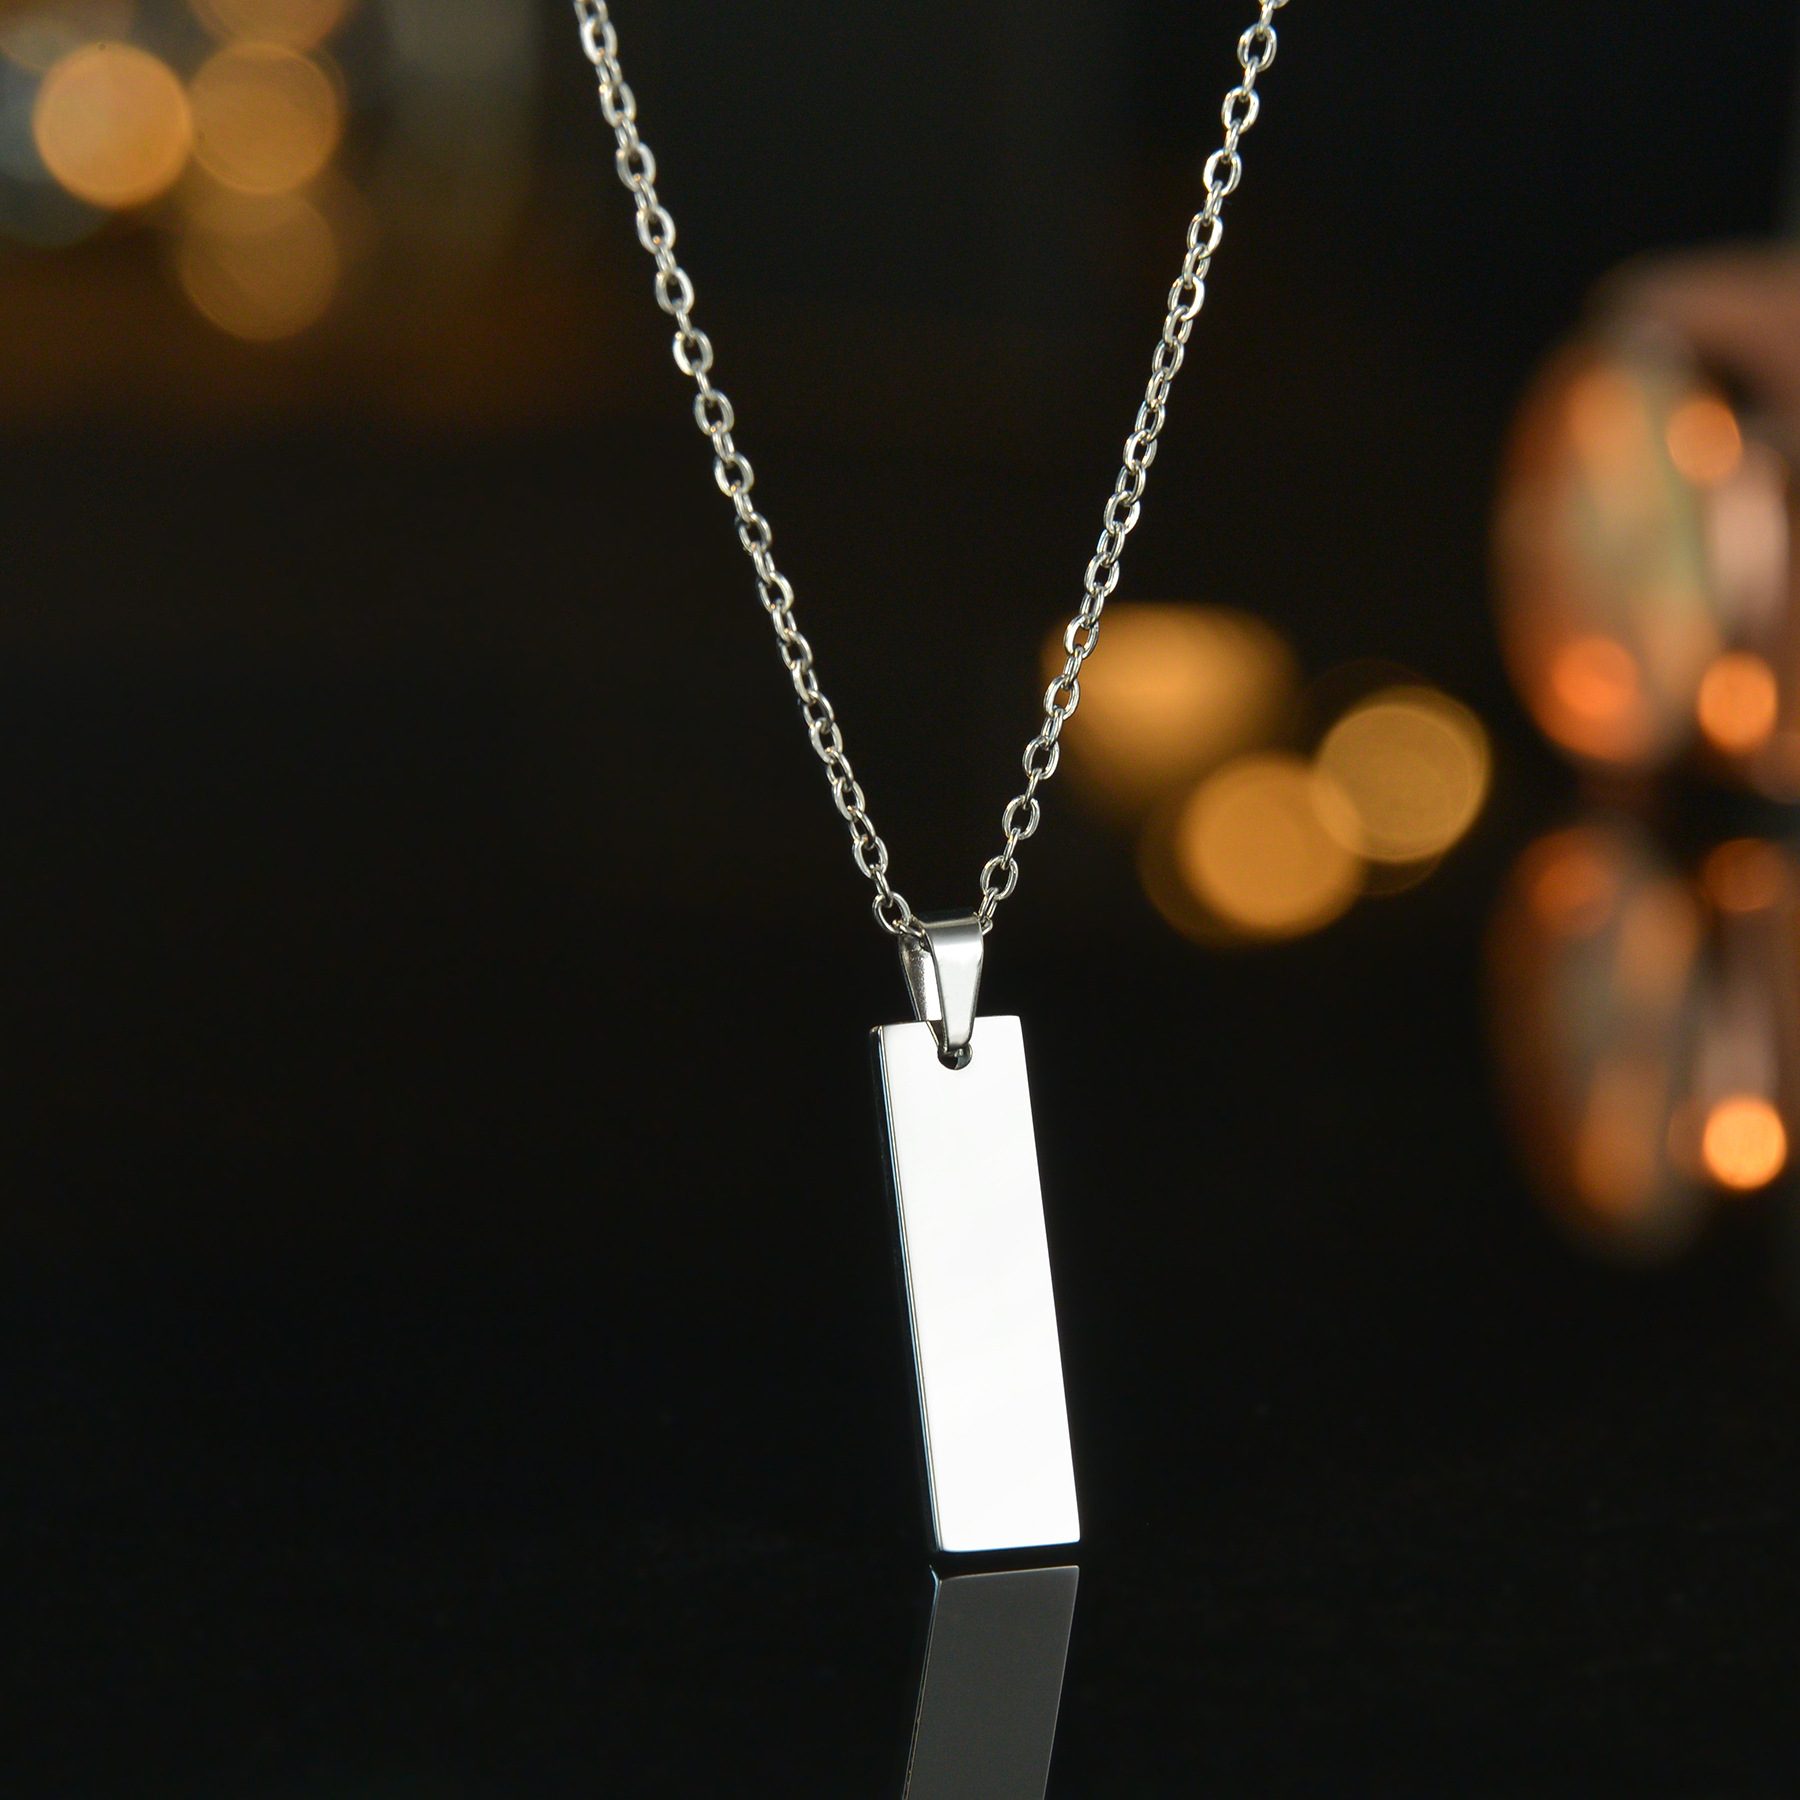 3:Ladies - Steel necklace